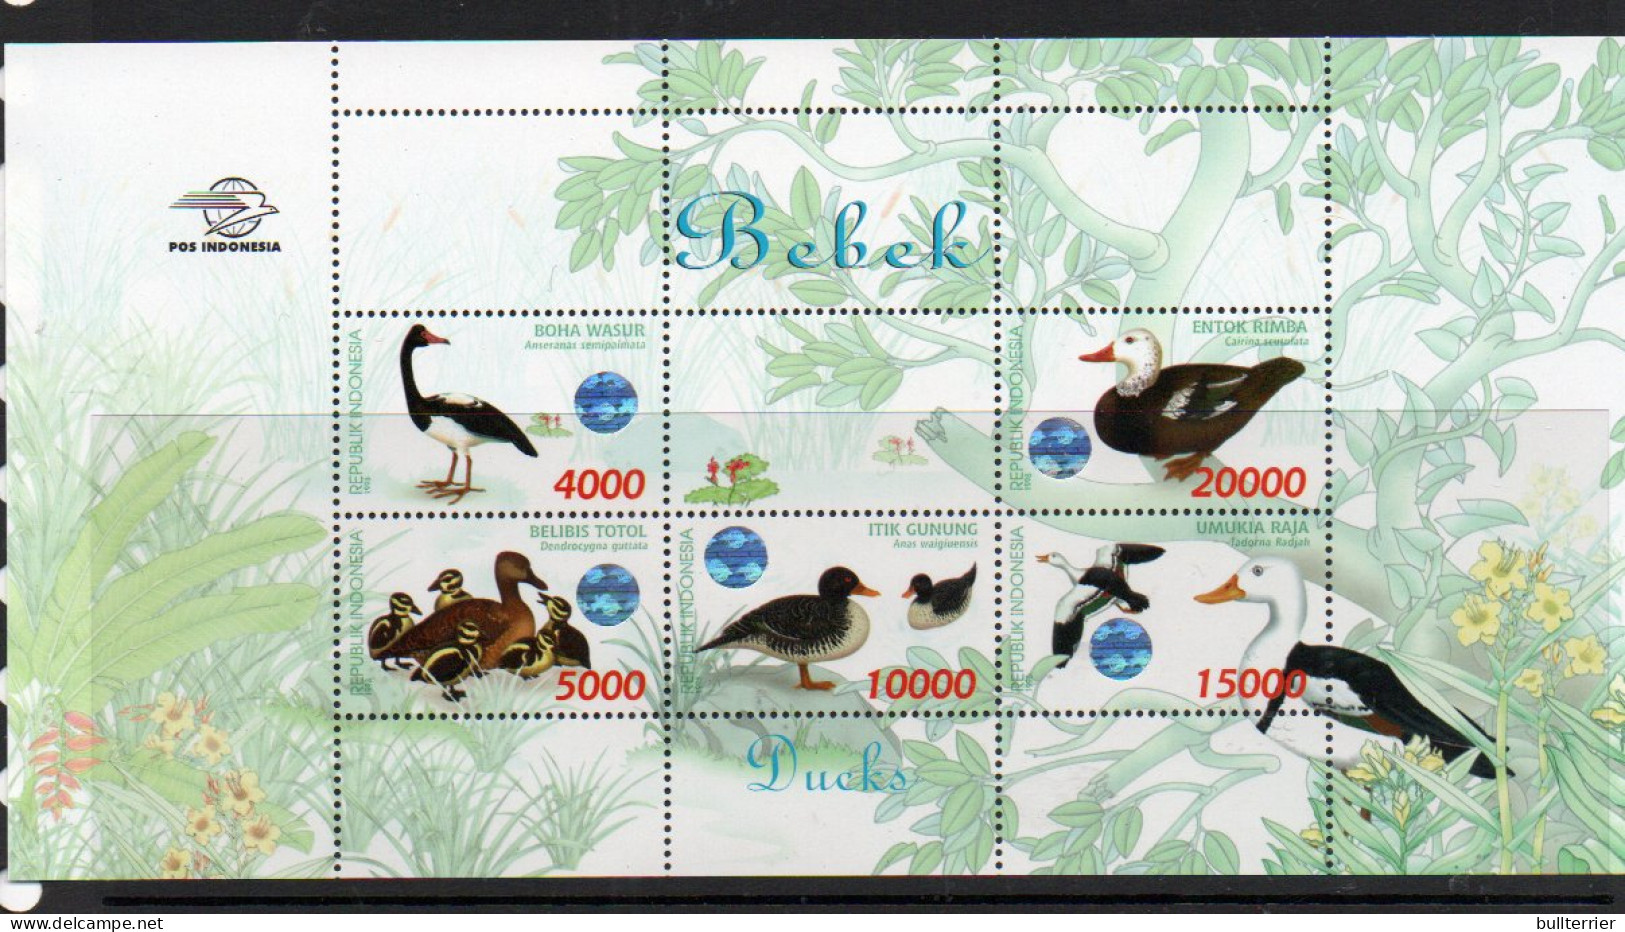 BIRDS - INDONESIA-  1998- WATERFOWL SOUVENIR SHEET  MINT NEVER HINGED,SG £30 - Tauben & Flughühner